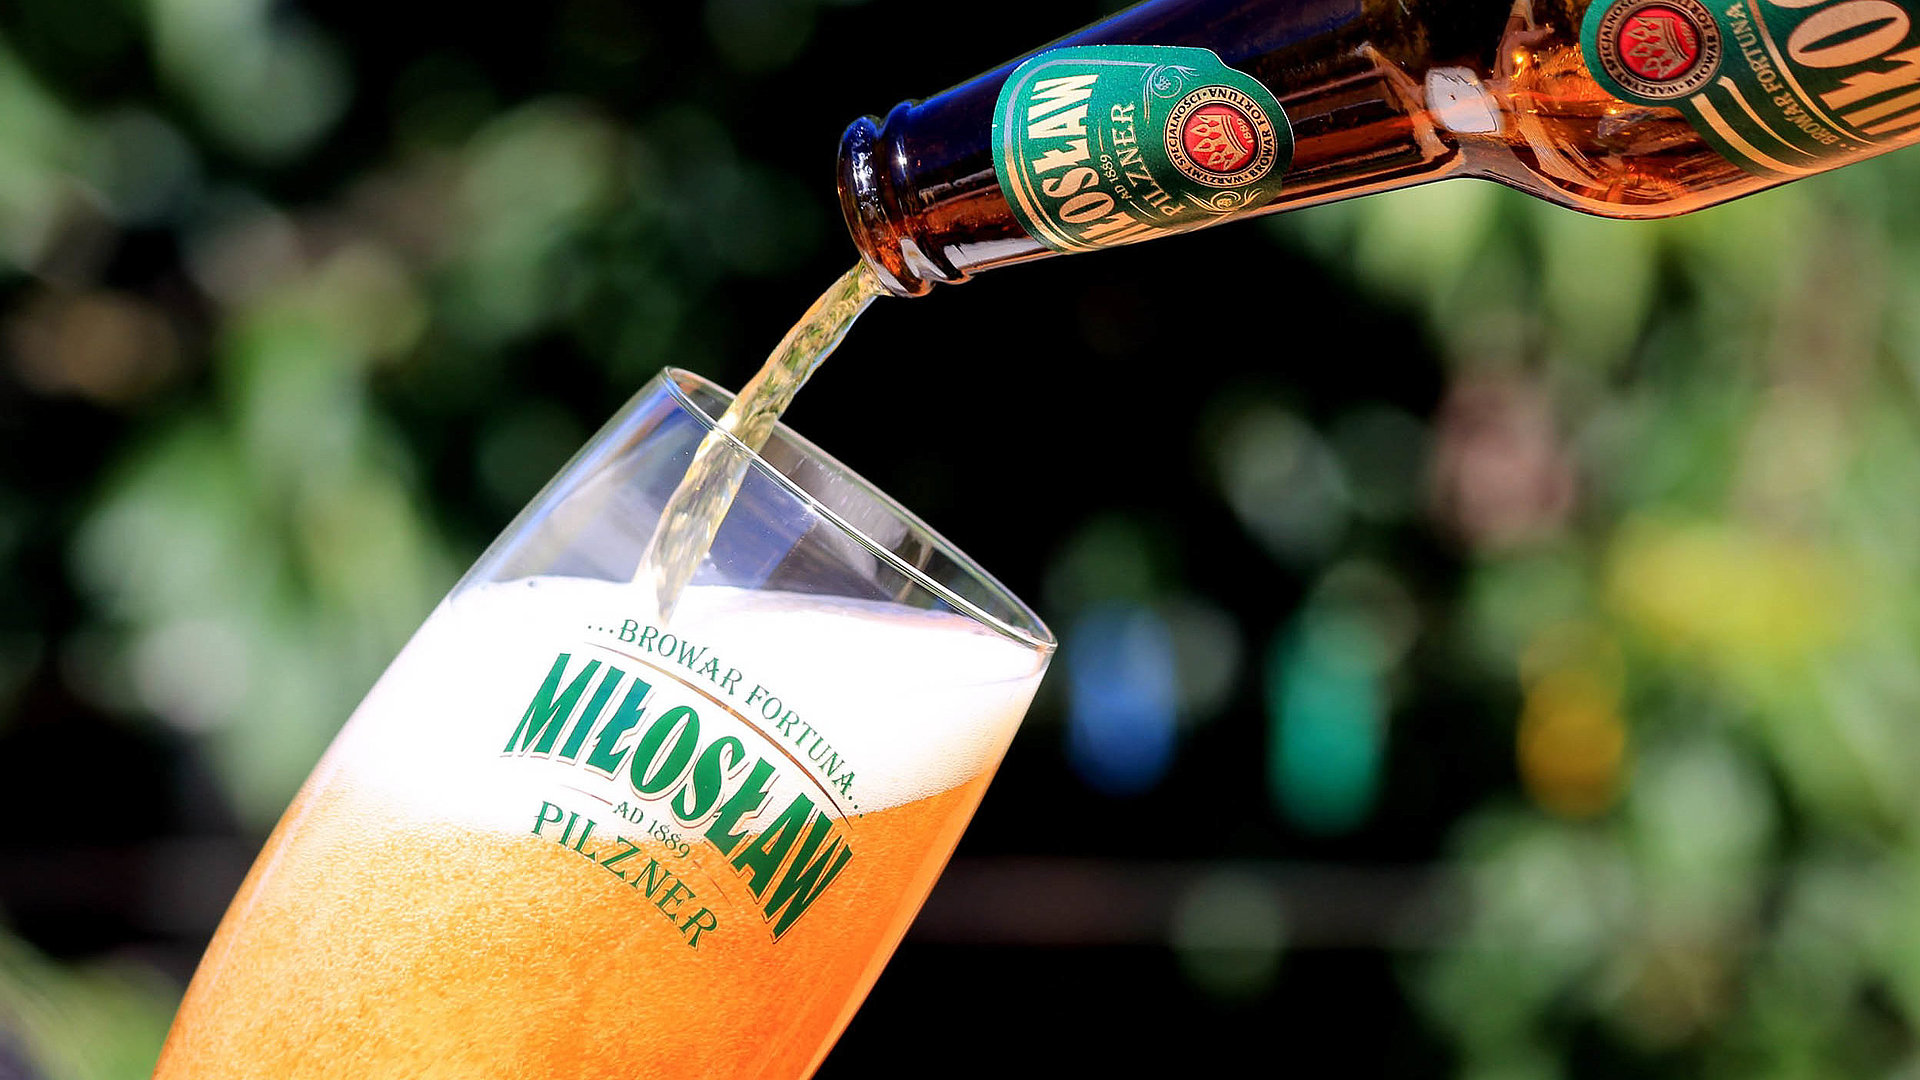 Biergarten in Oberfranken - Bier wird soeben bis zum Rand aufgefüllt